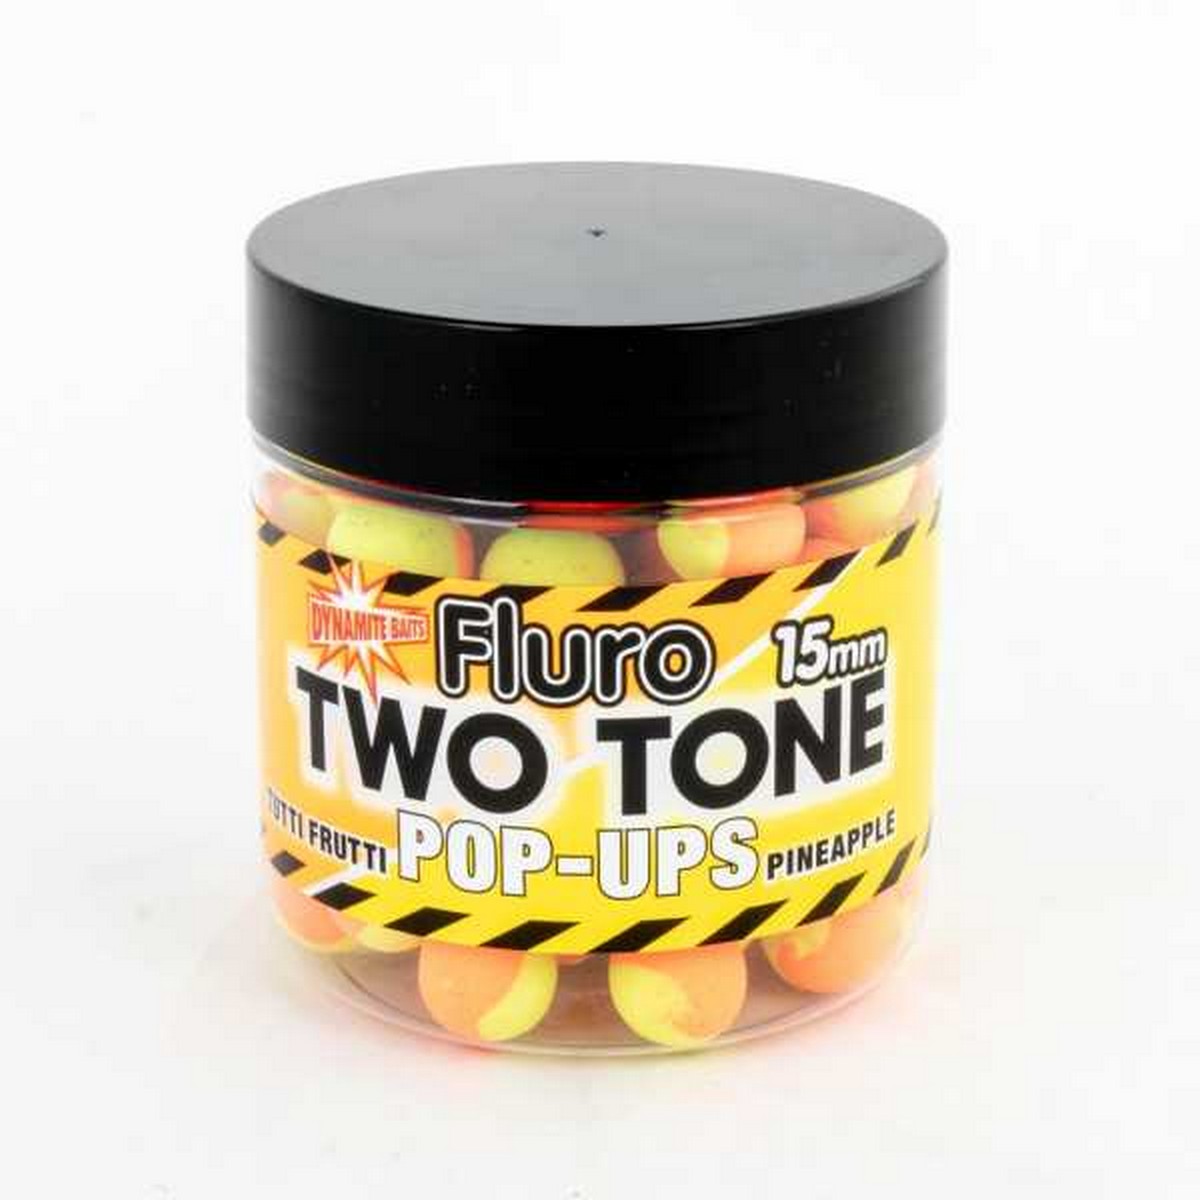 DB Boilie Pop-Up Fluro Two Tone Tutti Frutti & Pineapple – плуващи двуцветни топчета